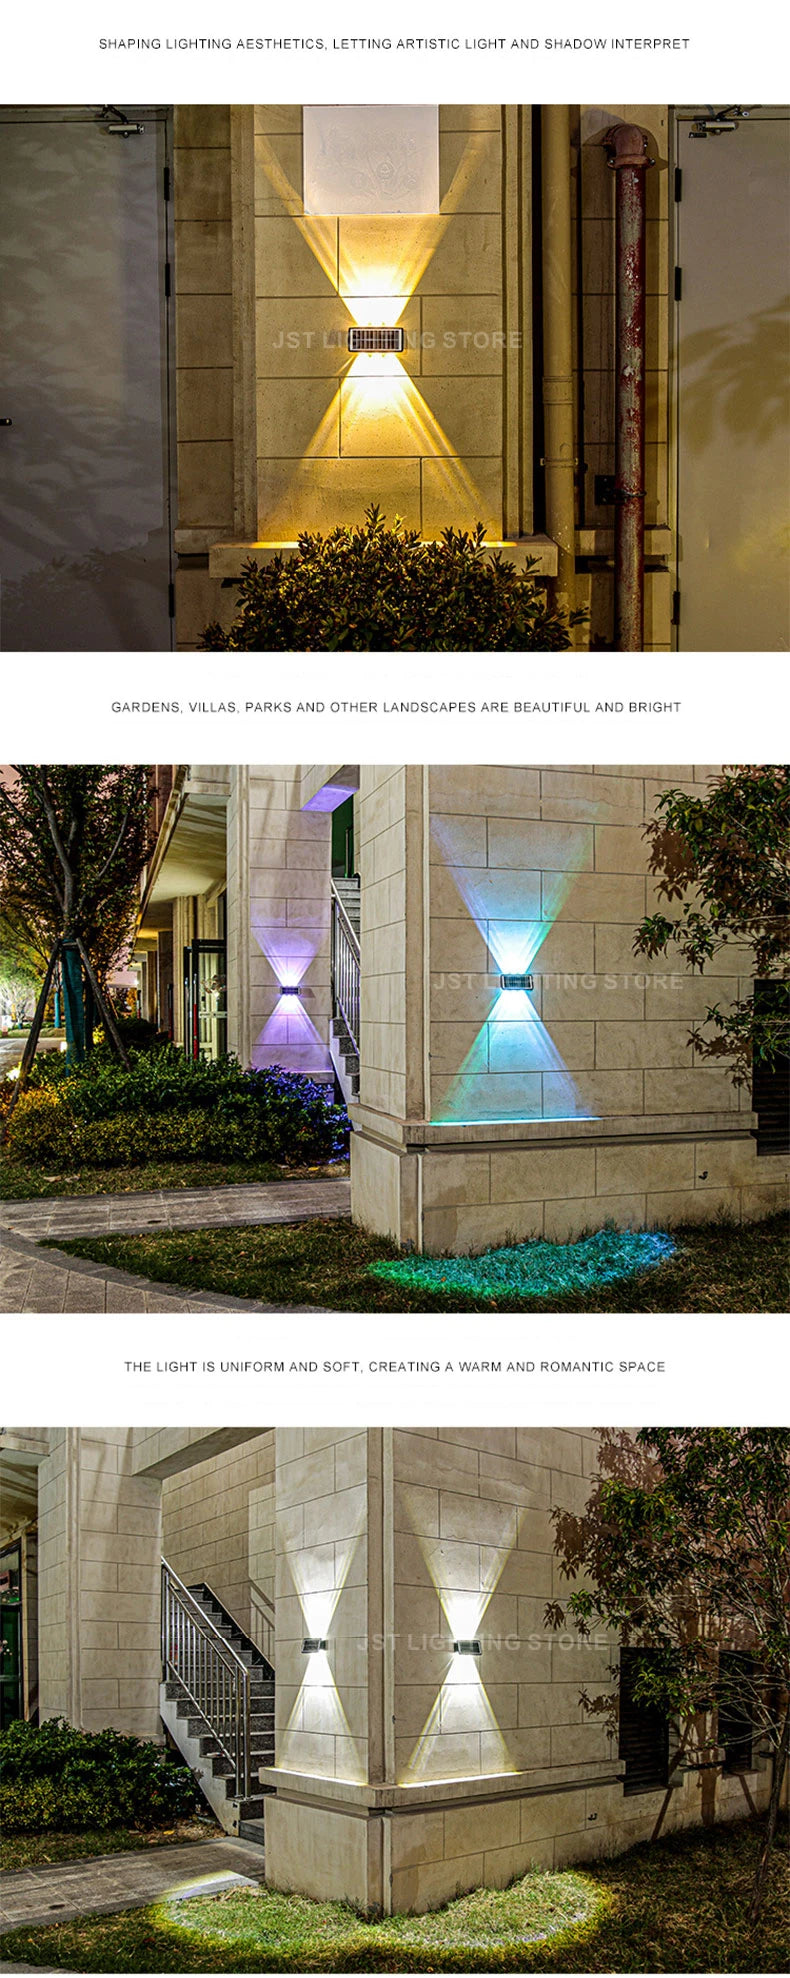 Solar LED Wall Light, Artistic solar-powered lamp creates soft, romantic light for gardens, villas, and parks.